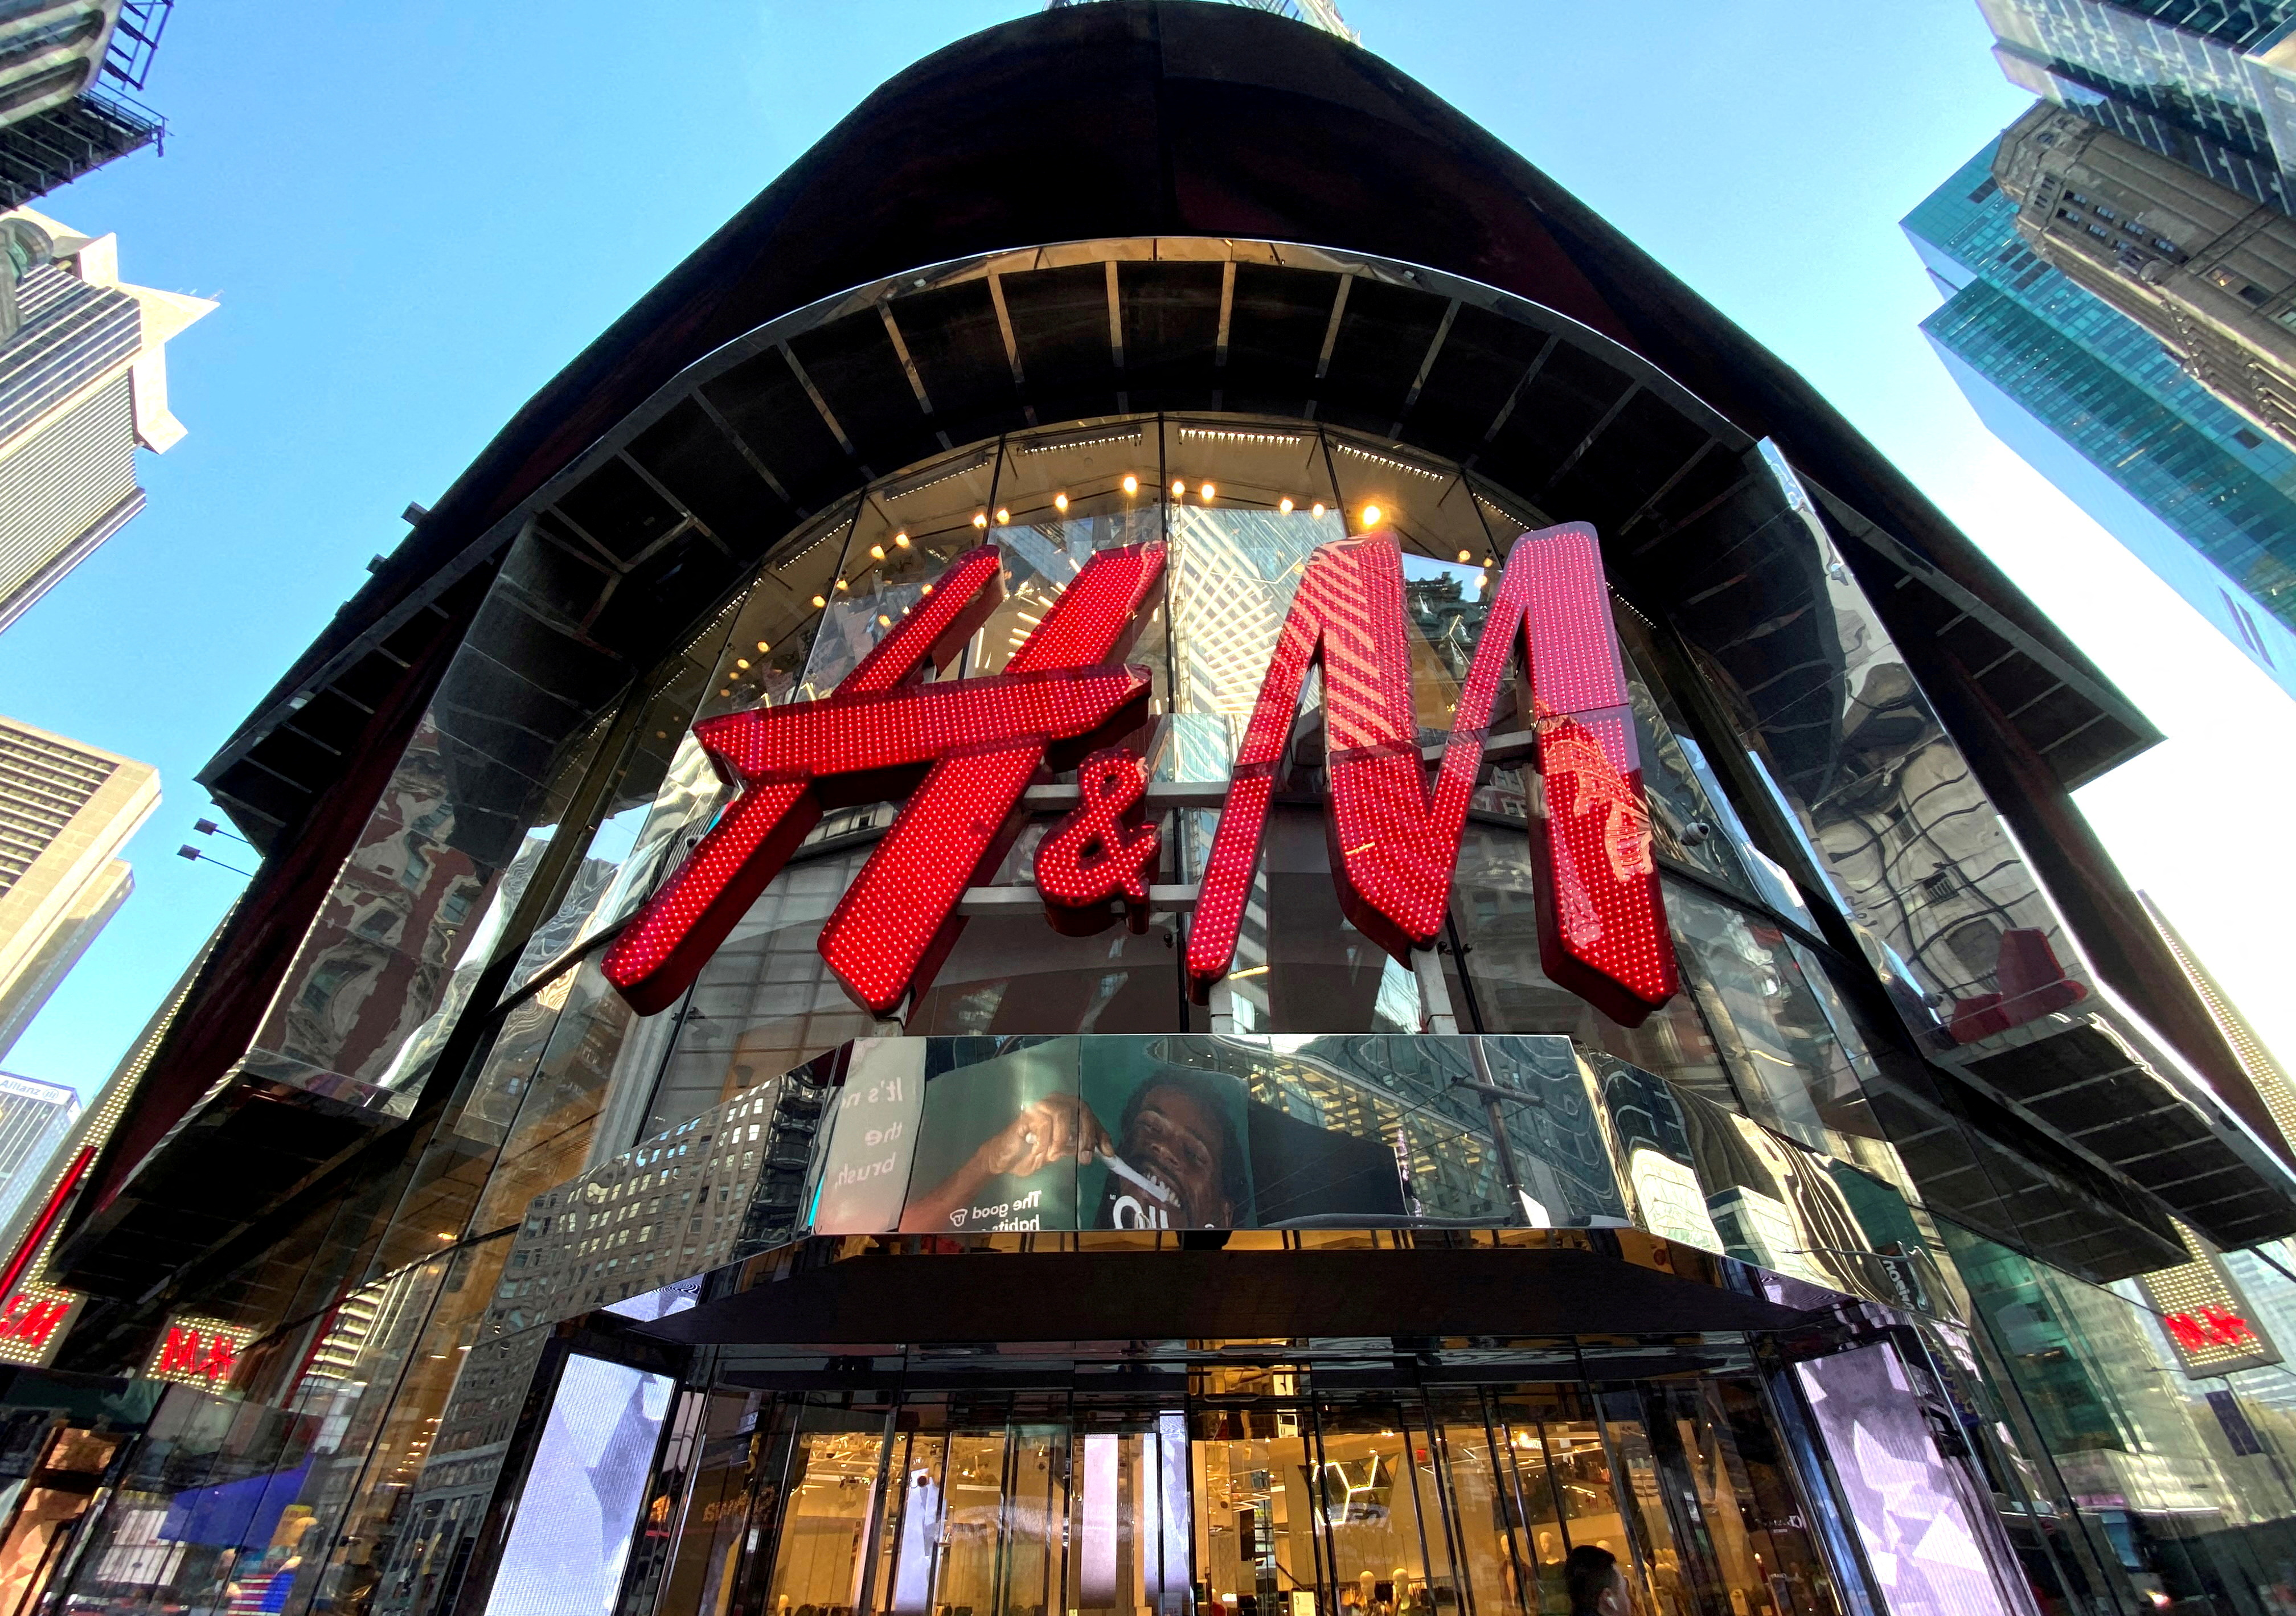 Fashion retailer H&M's sales jump, but investors fret over margins